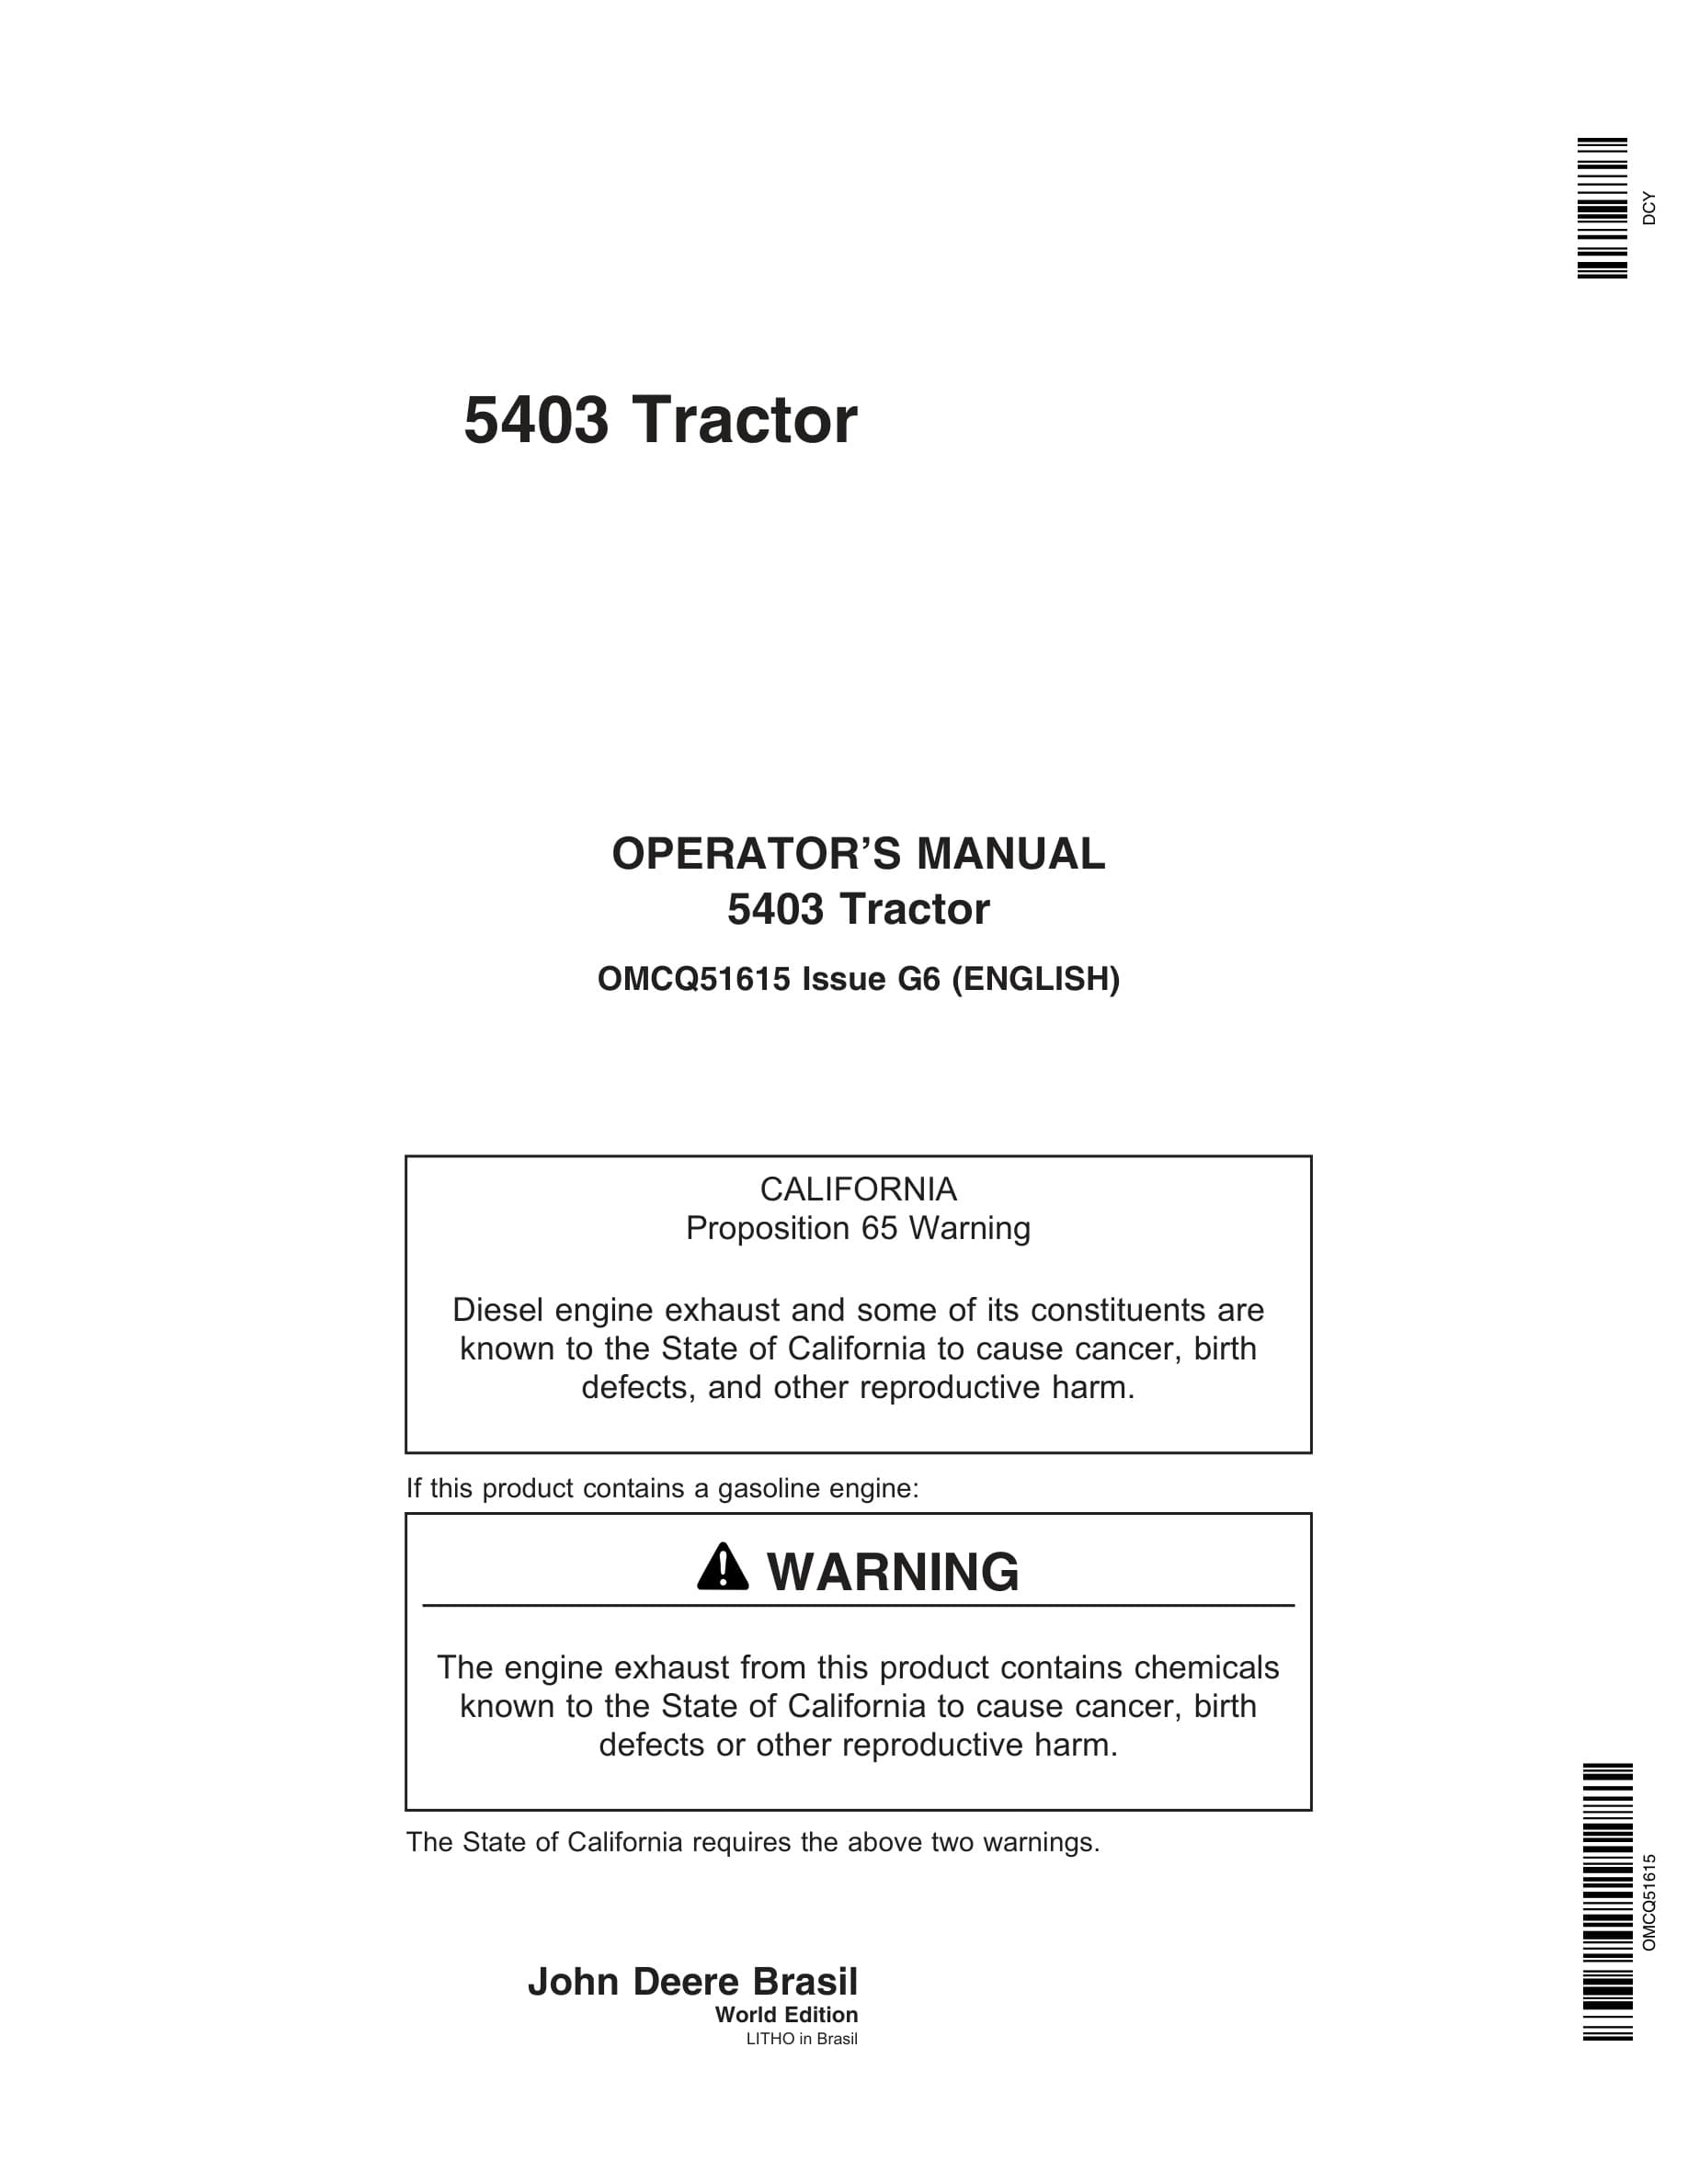 John Deere 5403 Tractors Operator Manual OMCQ51615-1